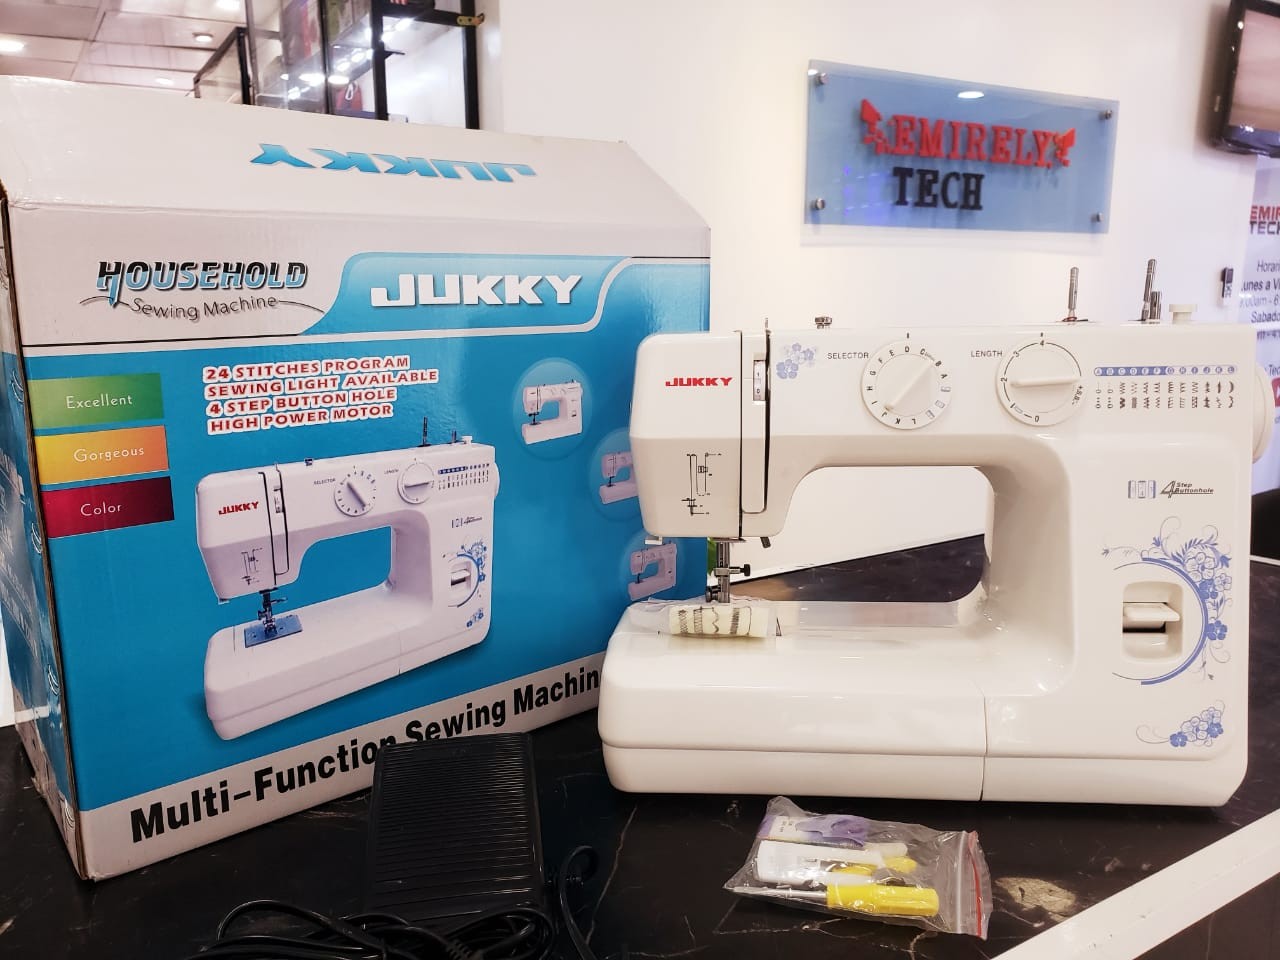 equipos profesionales - Maquina de coser Electrica multifuncional profesional JUKKY FH6224 5